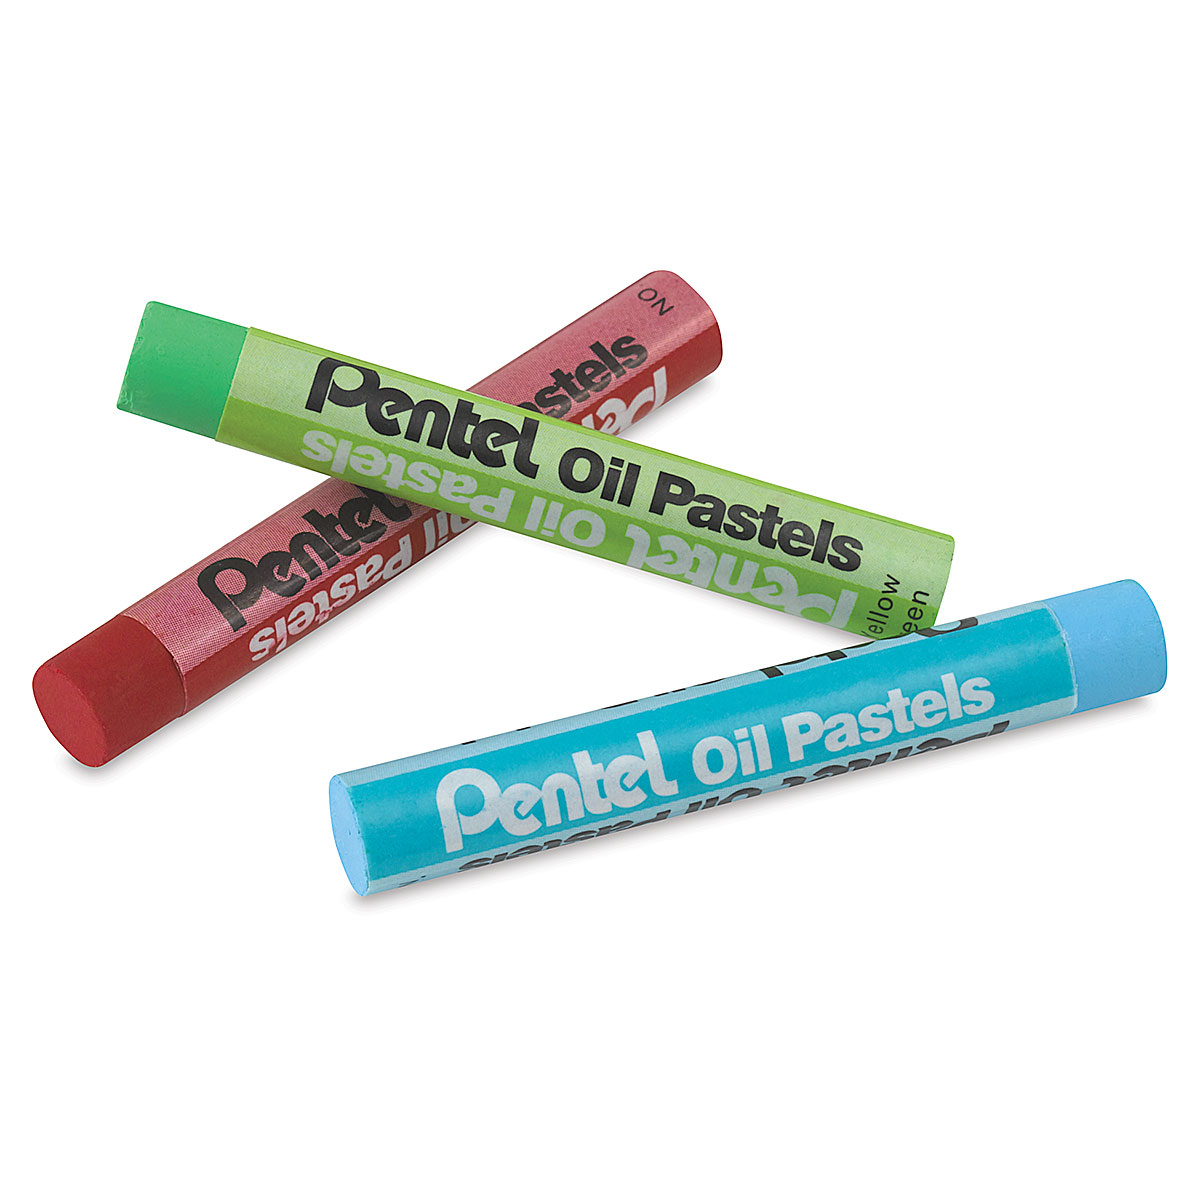 Pentel Oil Pastel Sets | BLICK Art Materials